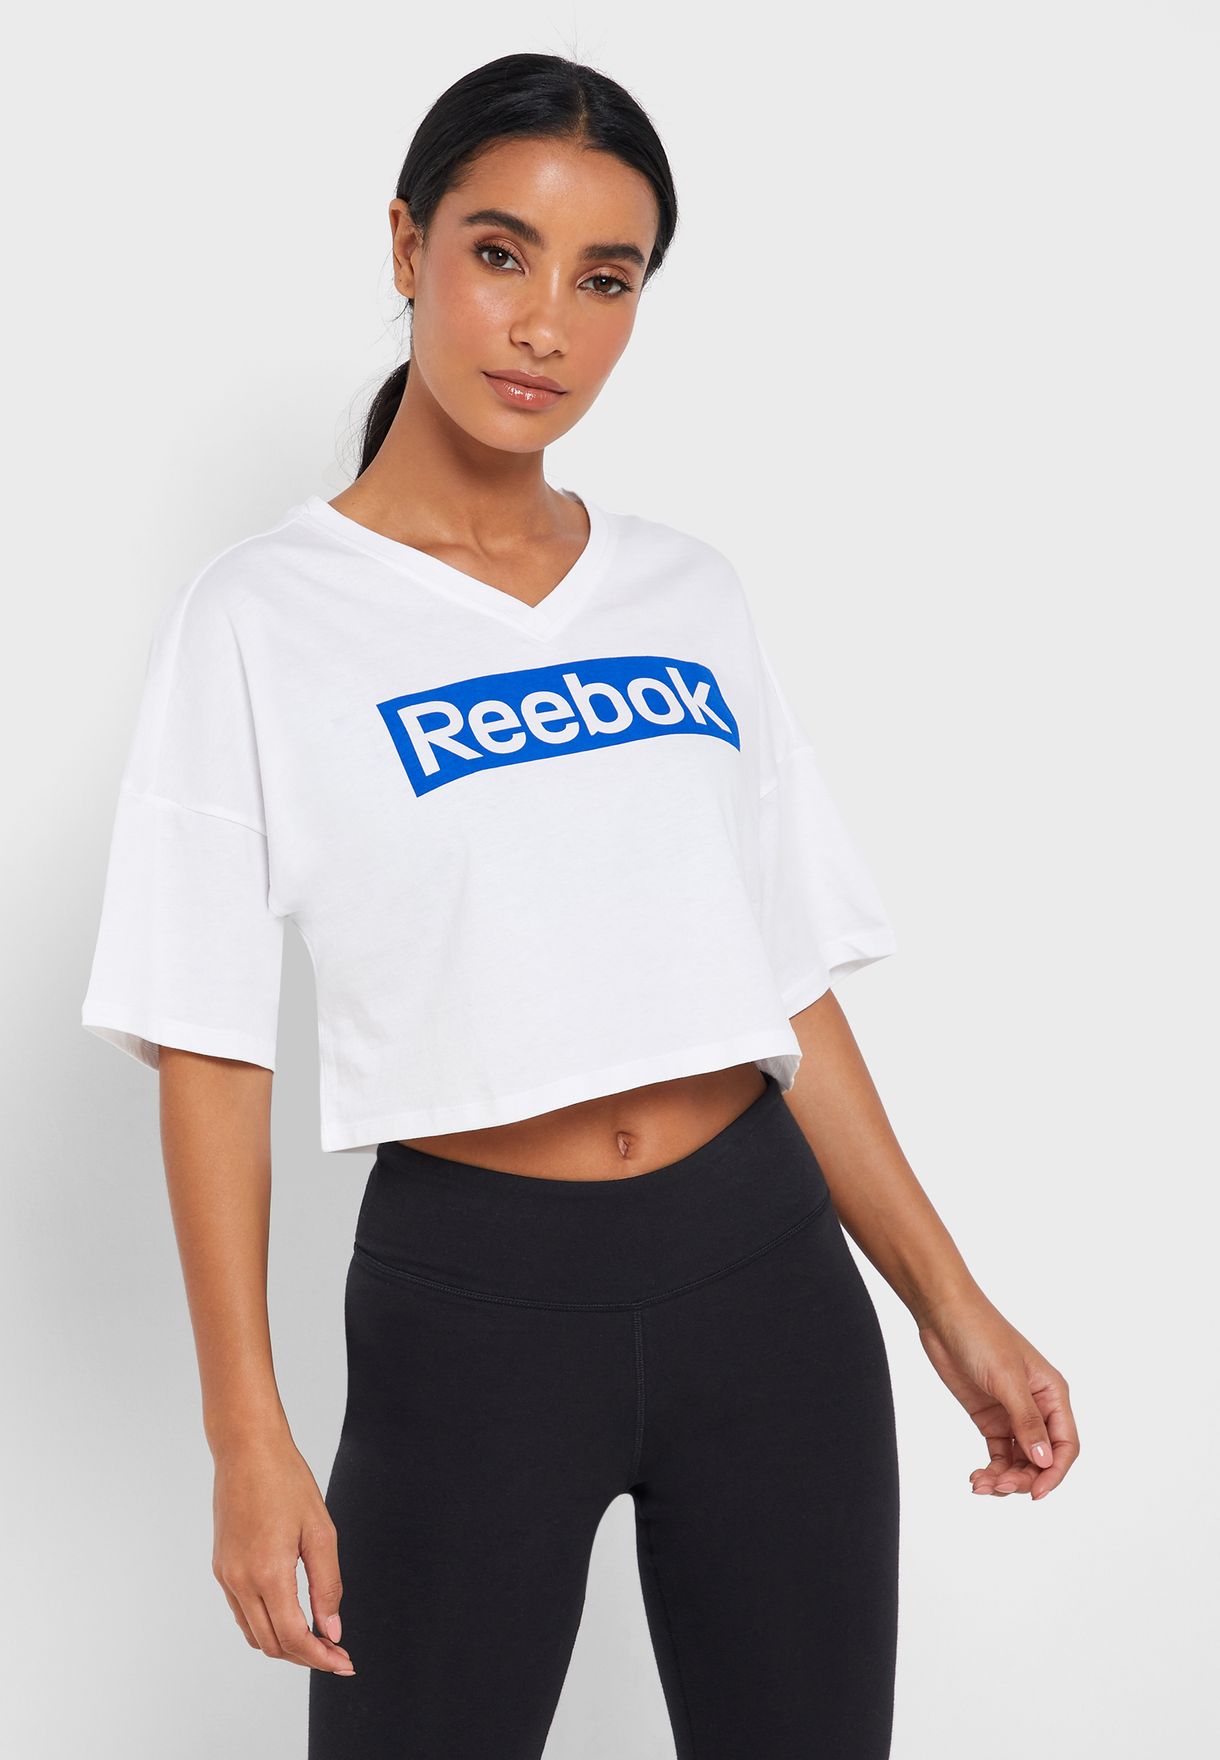 reebok t shirt cheapest price